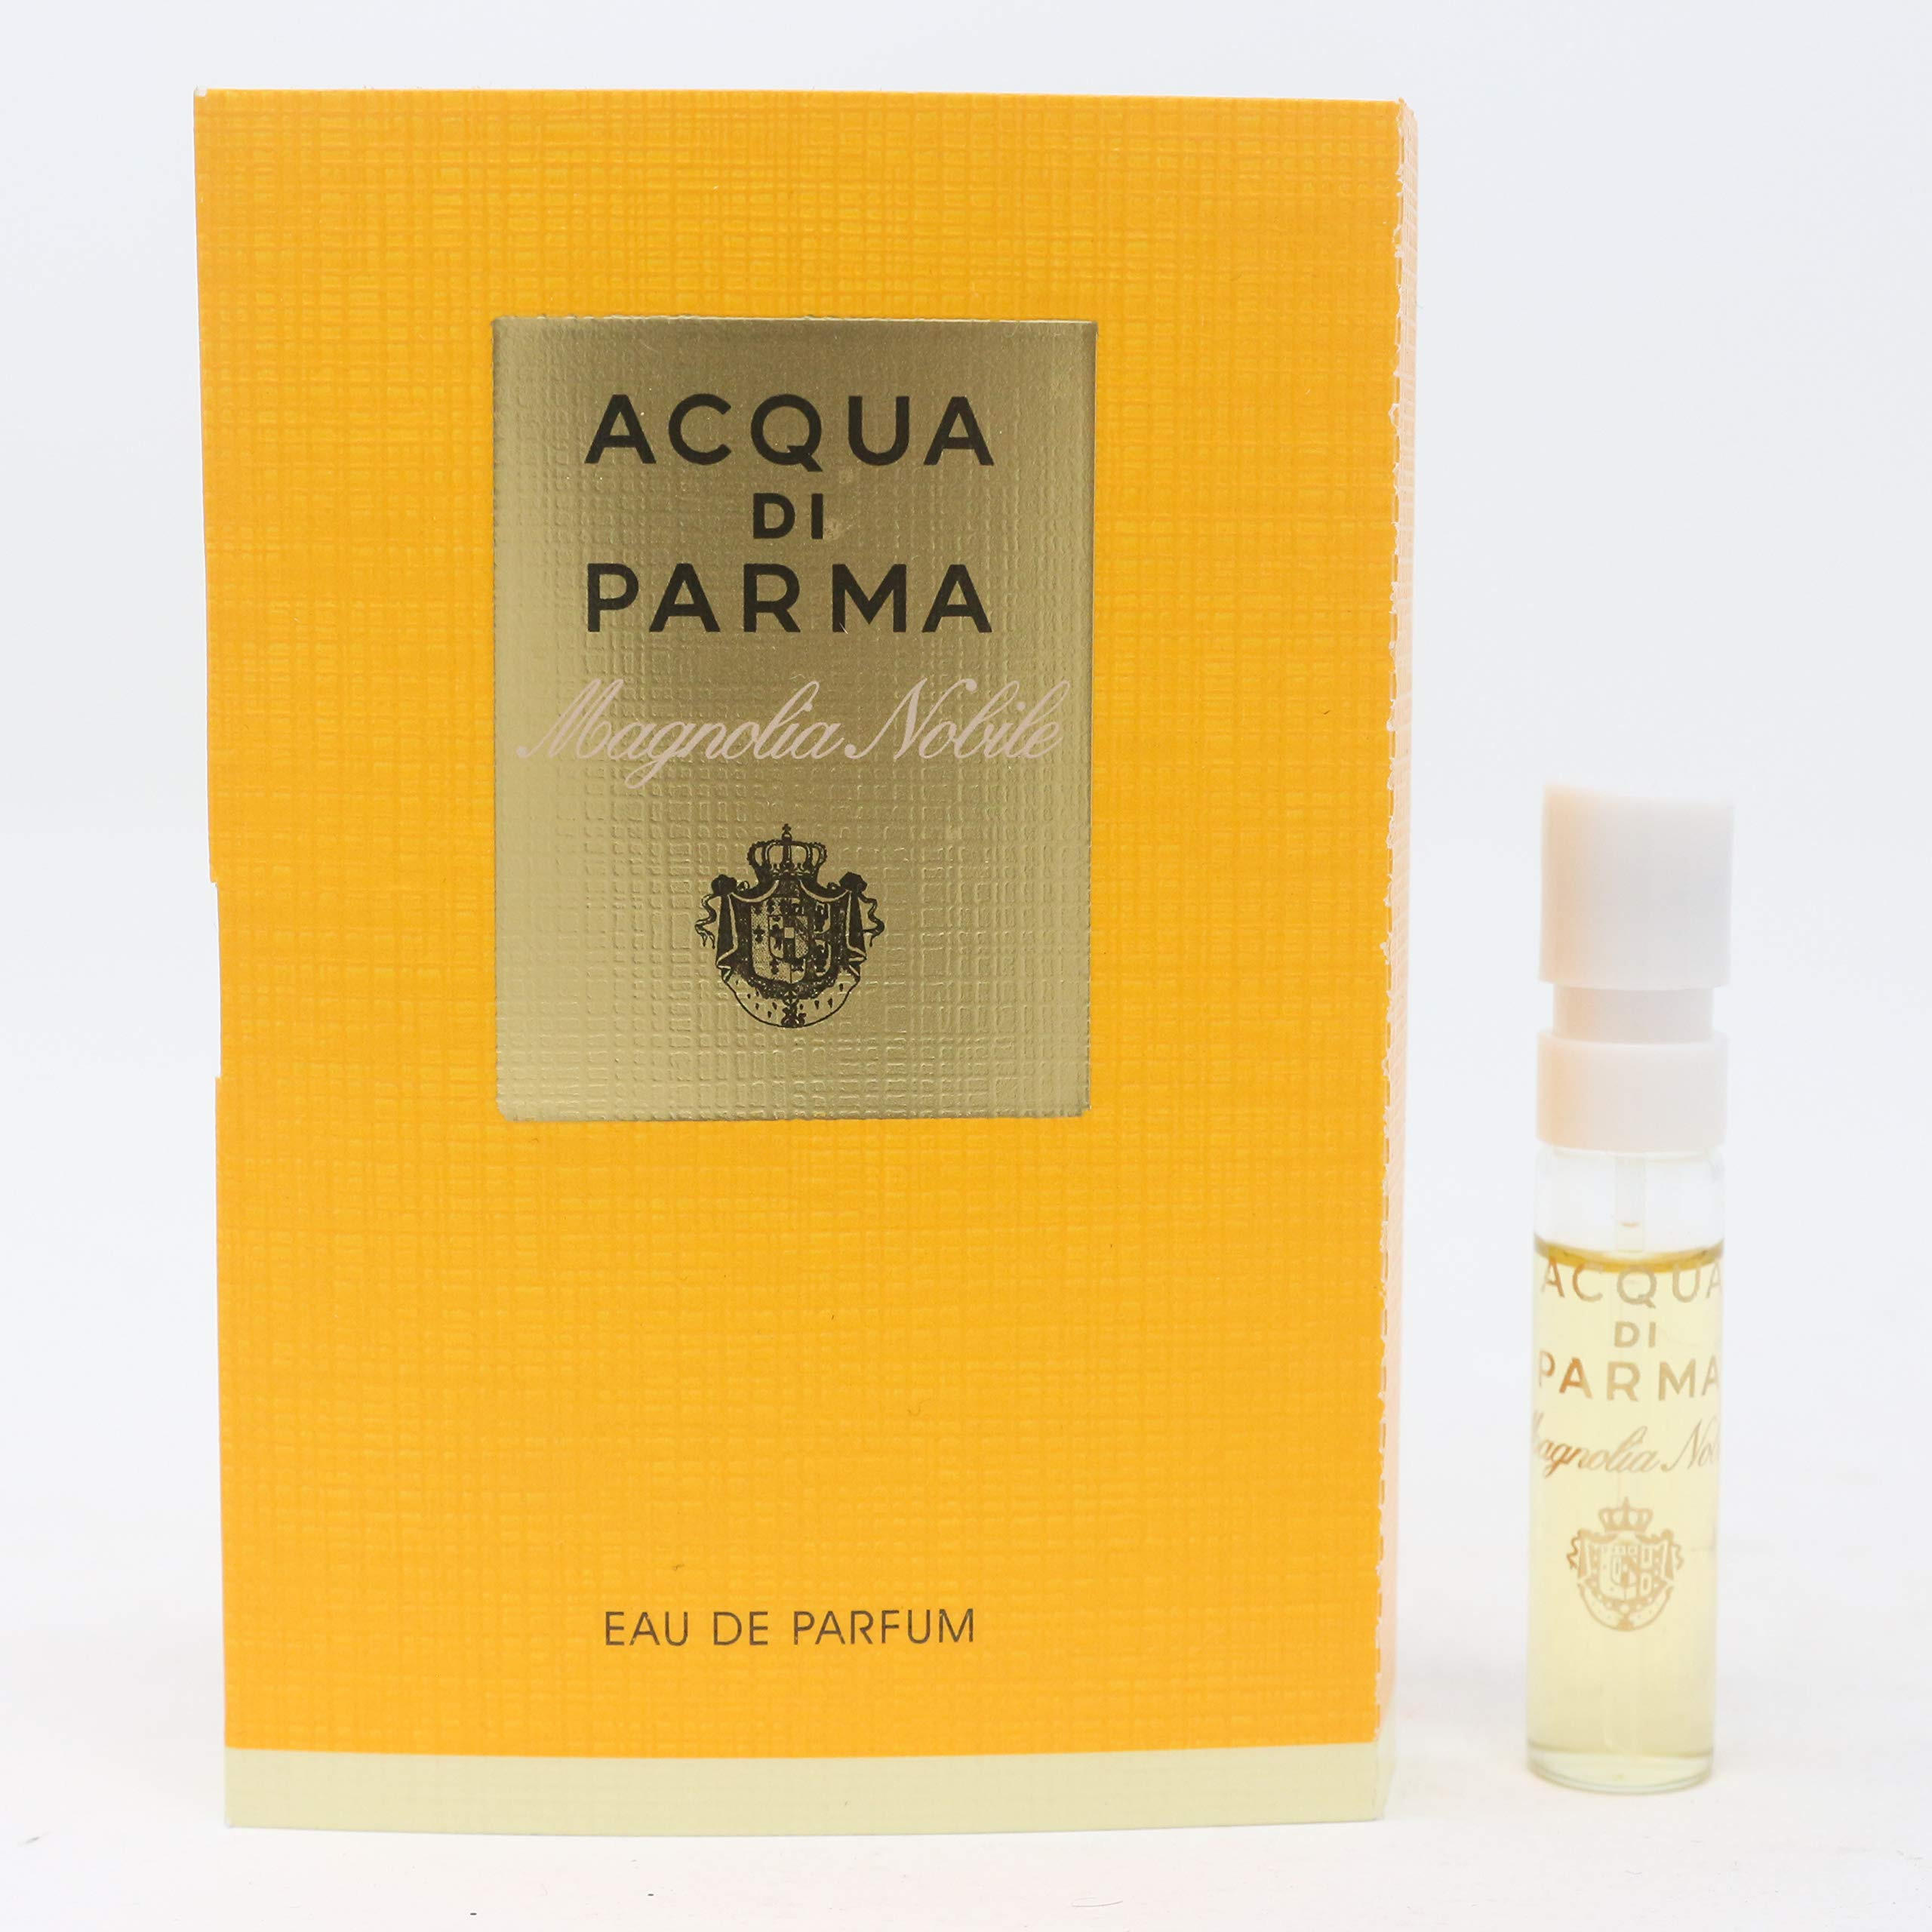 Acqua Di Parma Magnolia Nobile Perfume Vial